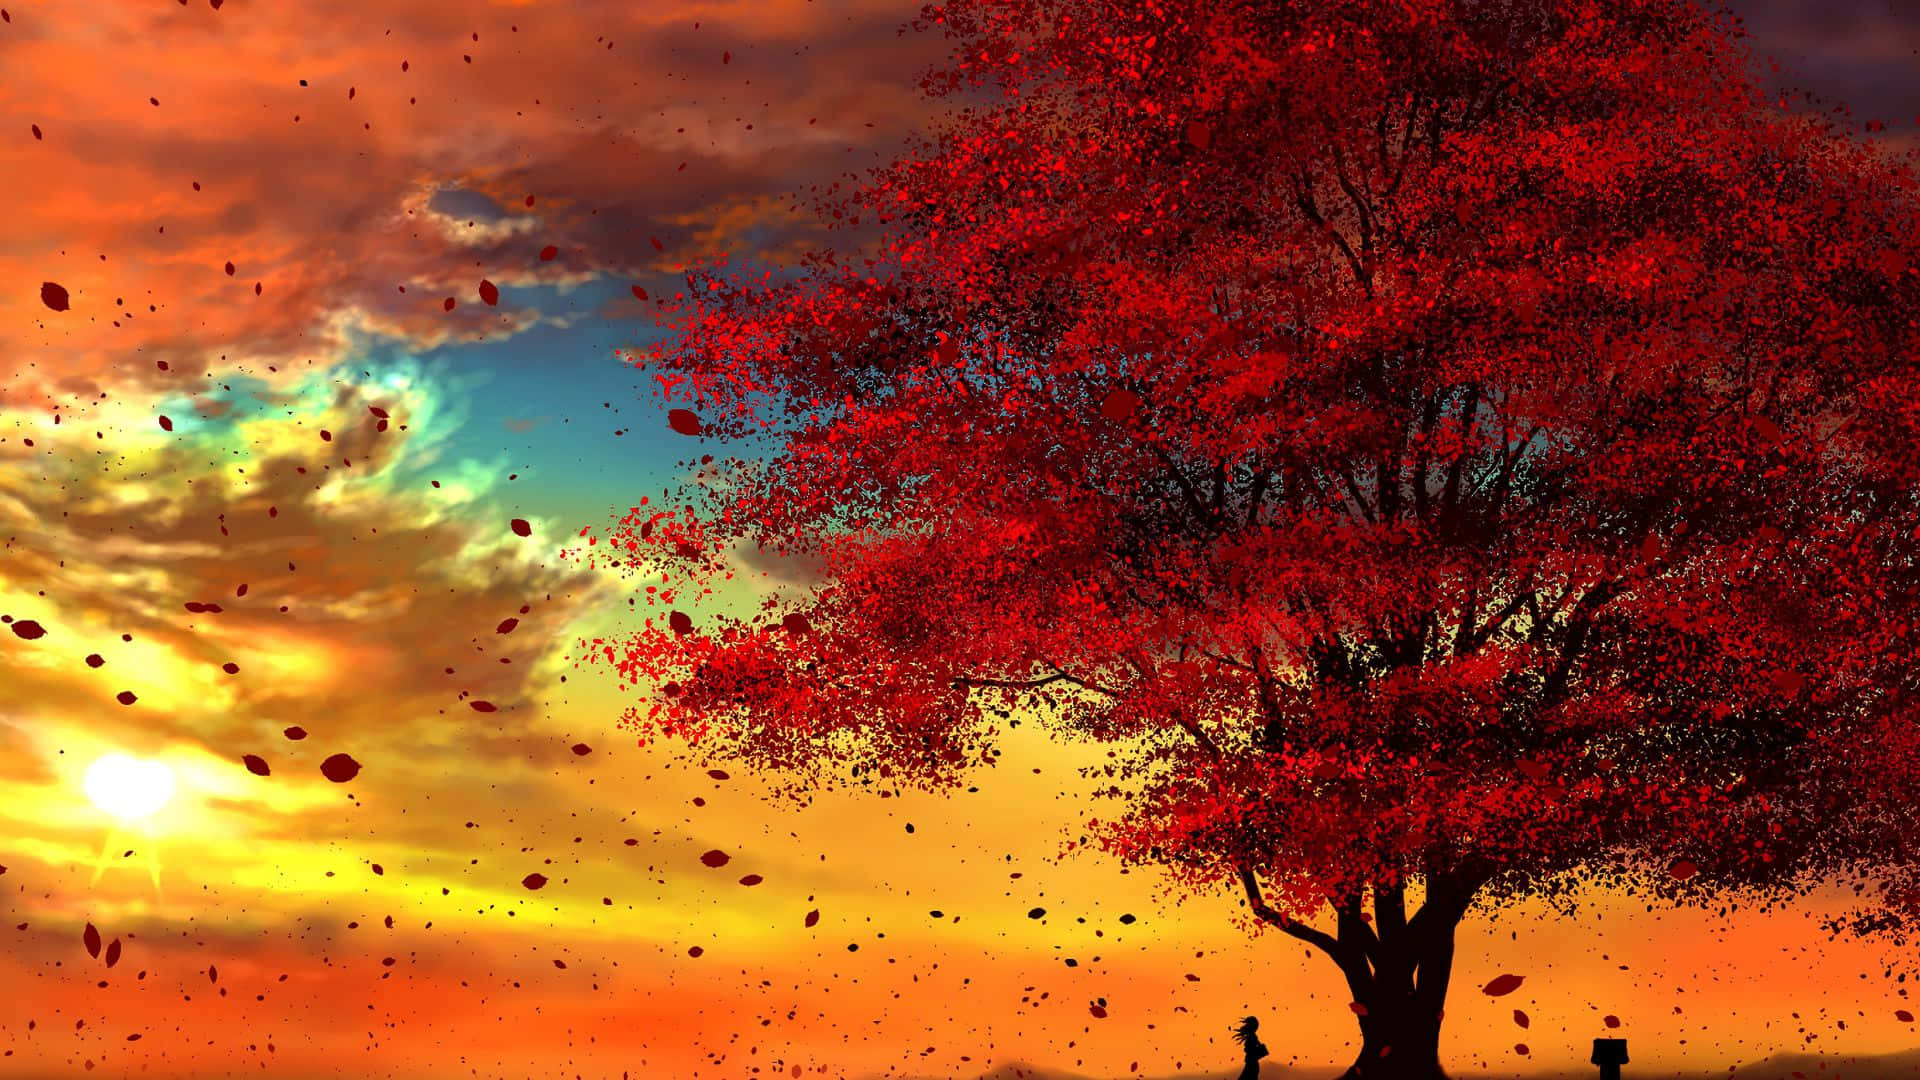 PC Wallpaper 4K - Enchanting Ocean Sunset: A Colorful Fantasy